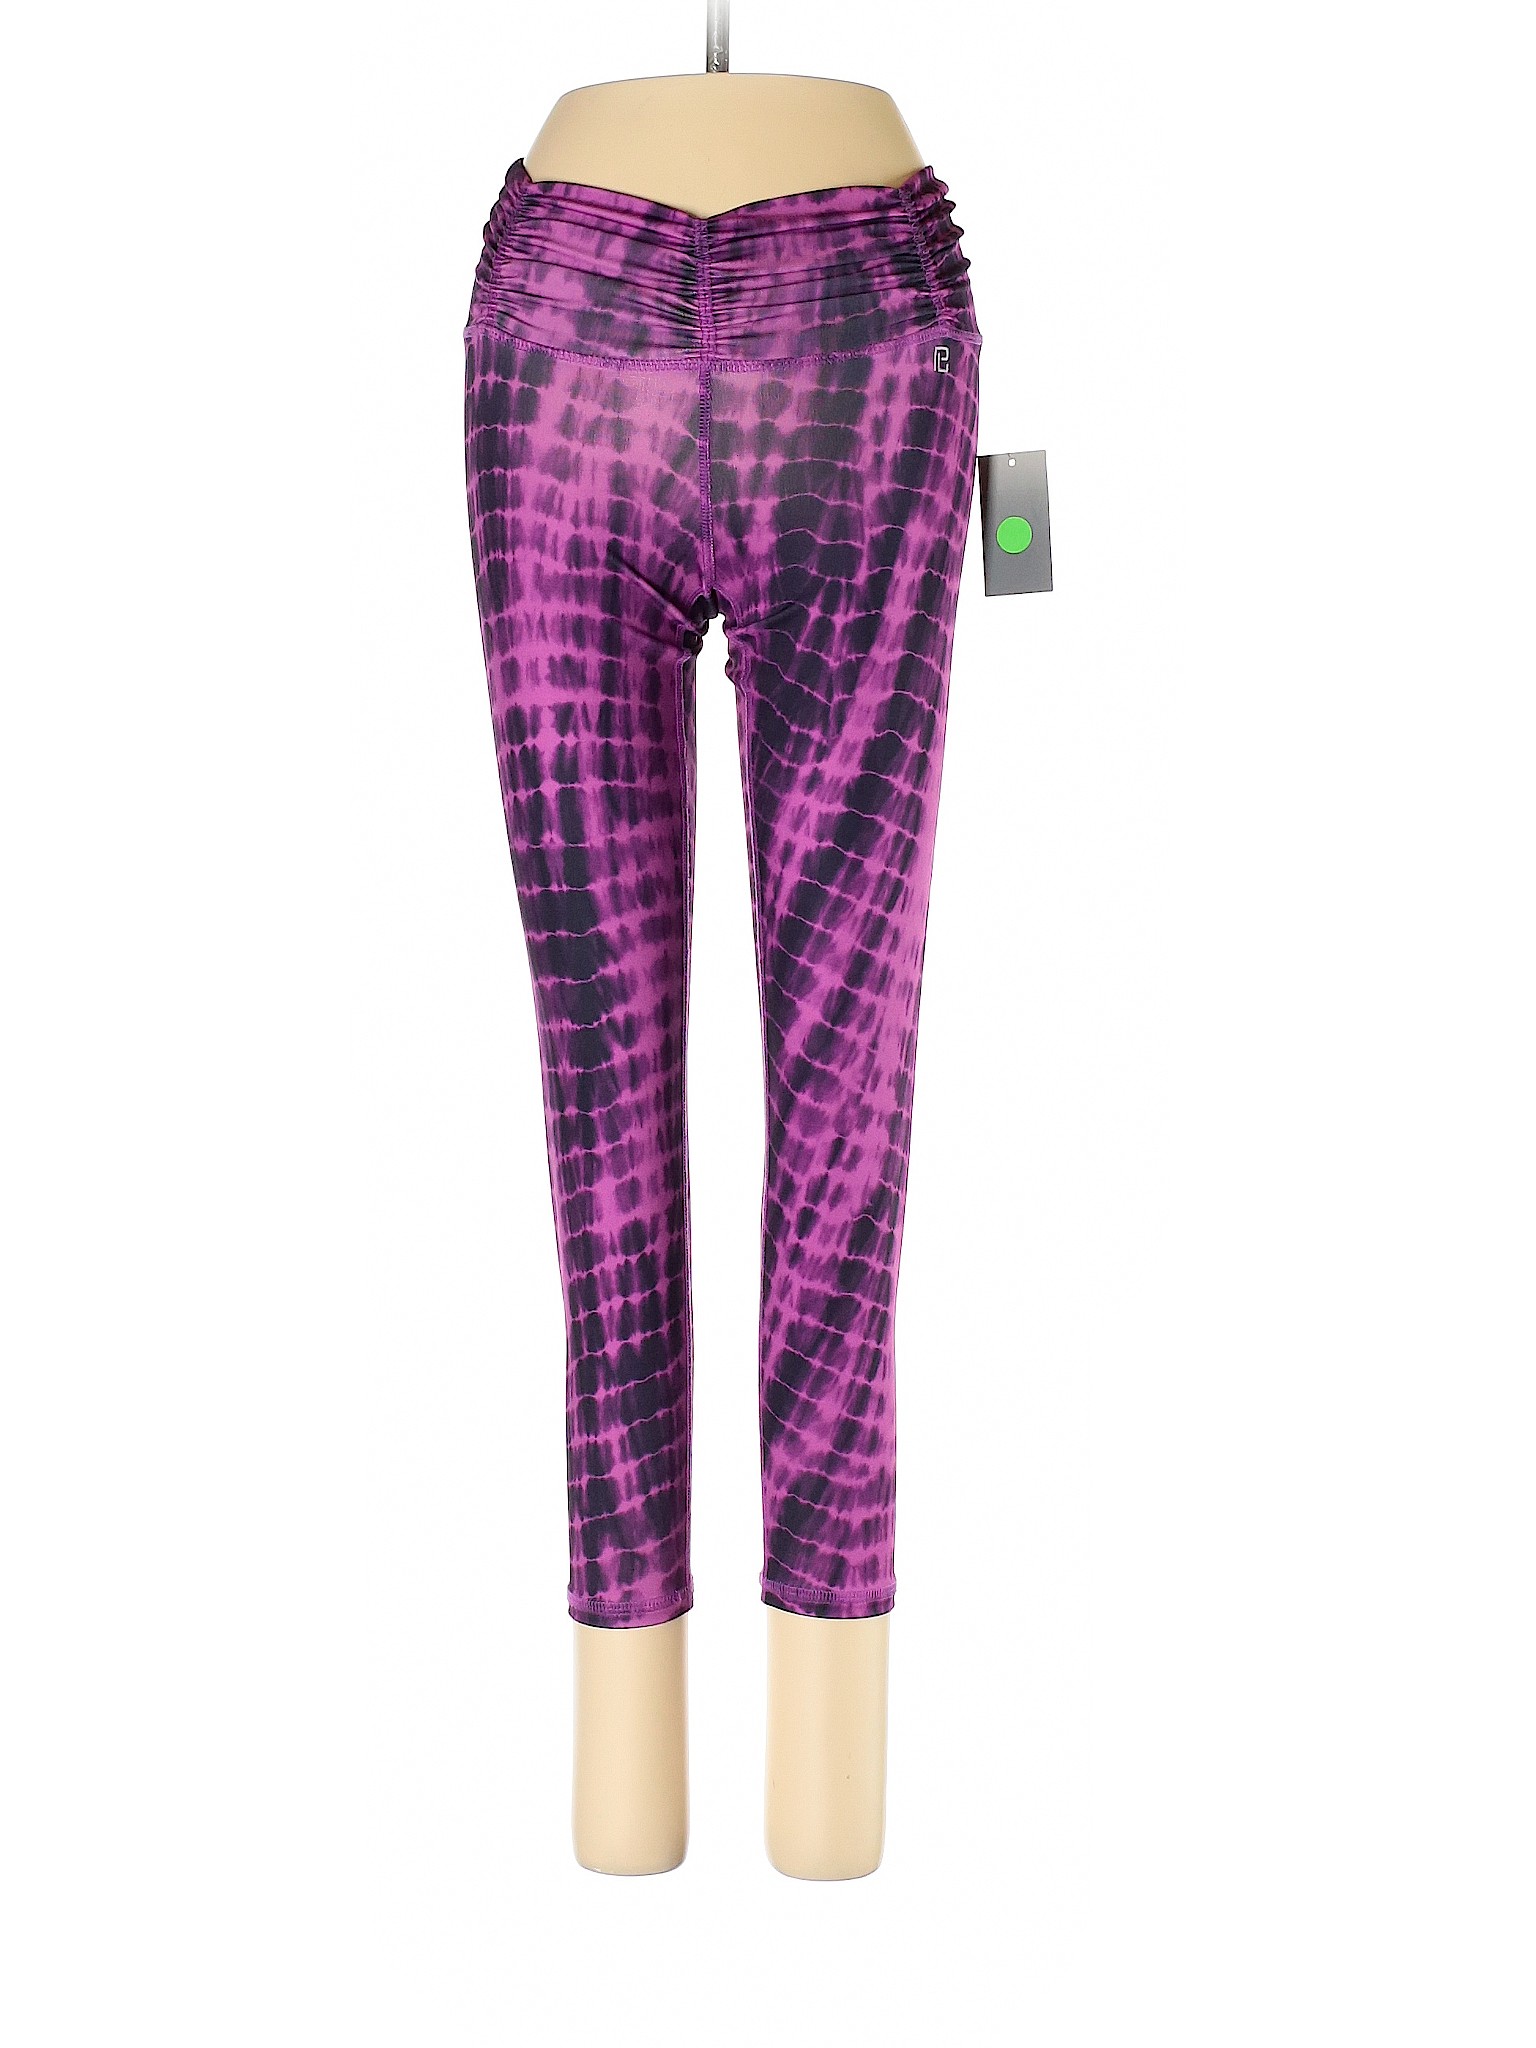 NWT Body Language Sportswear Women Purple Active Pants XS | eBay